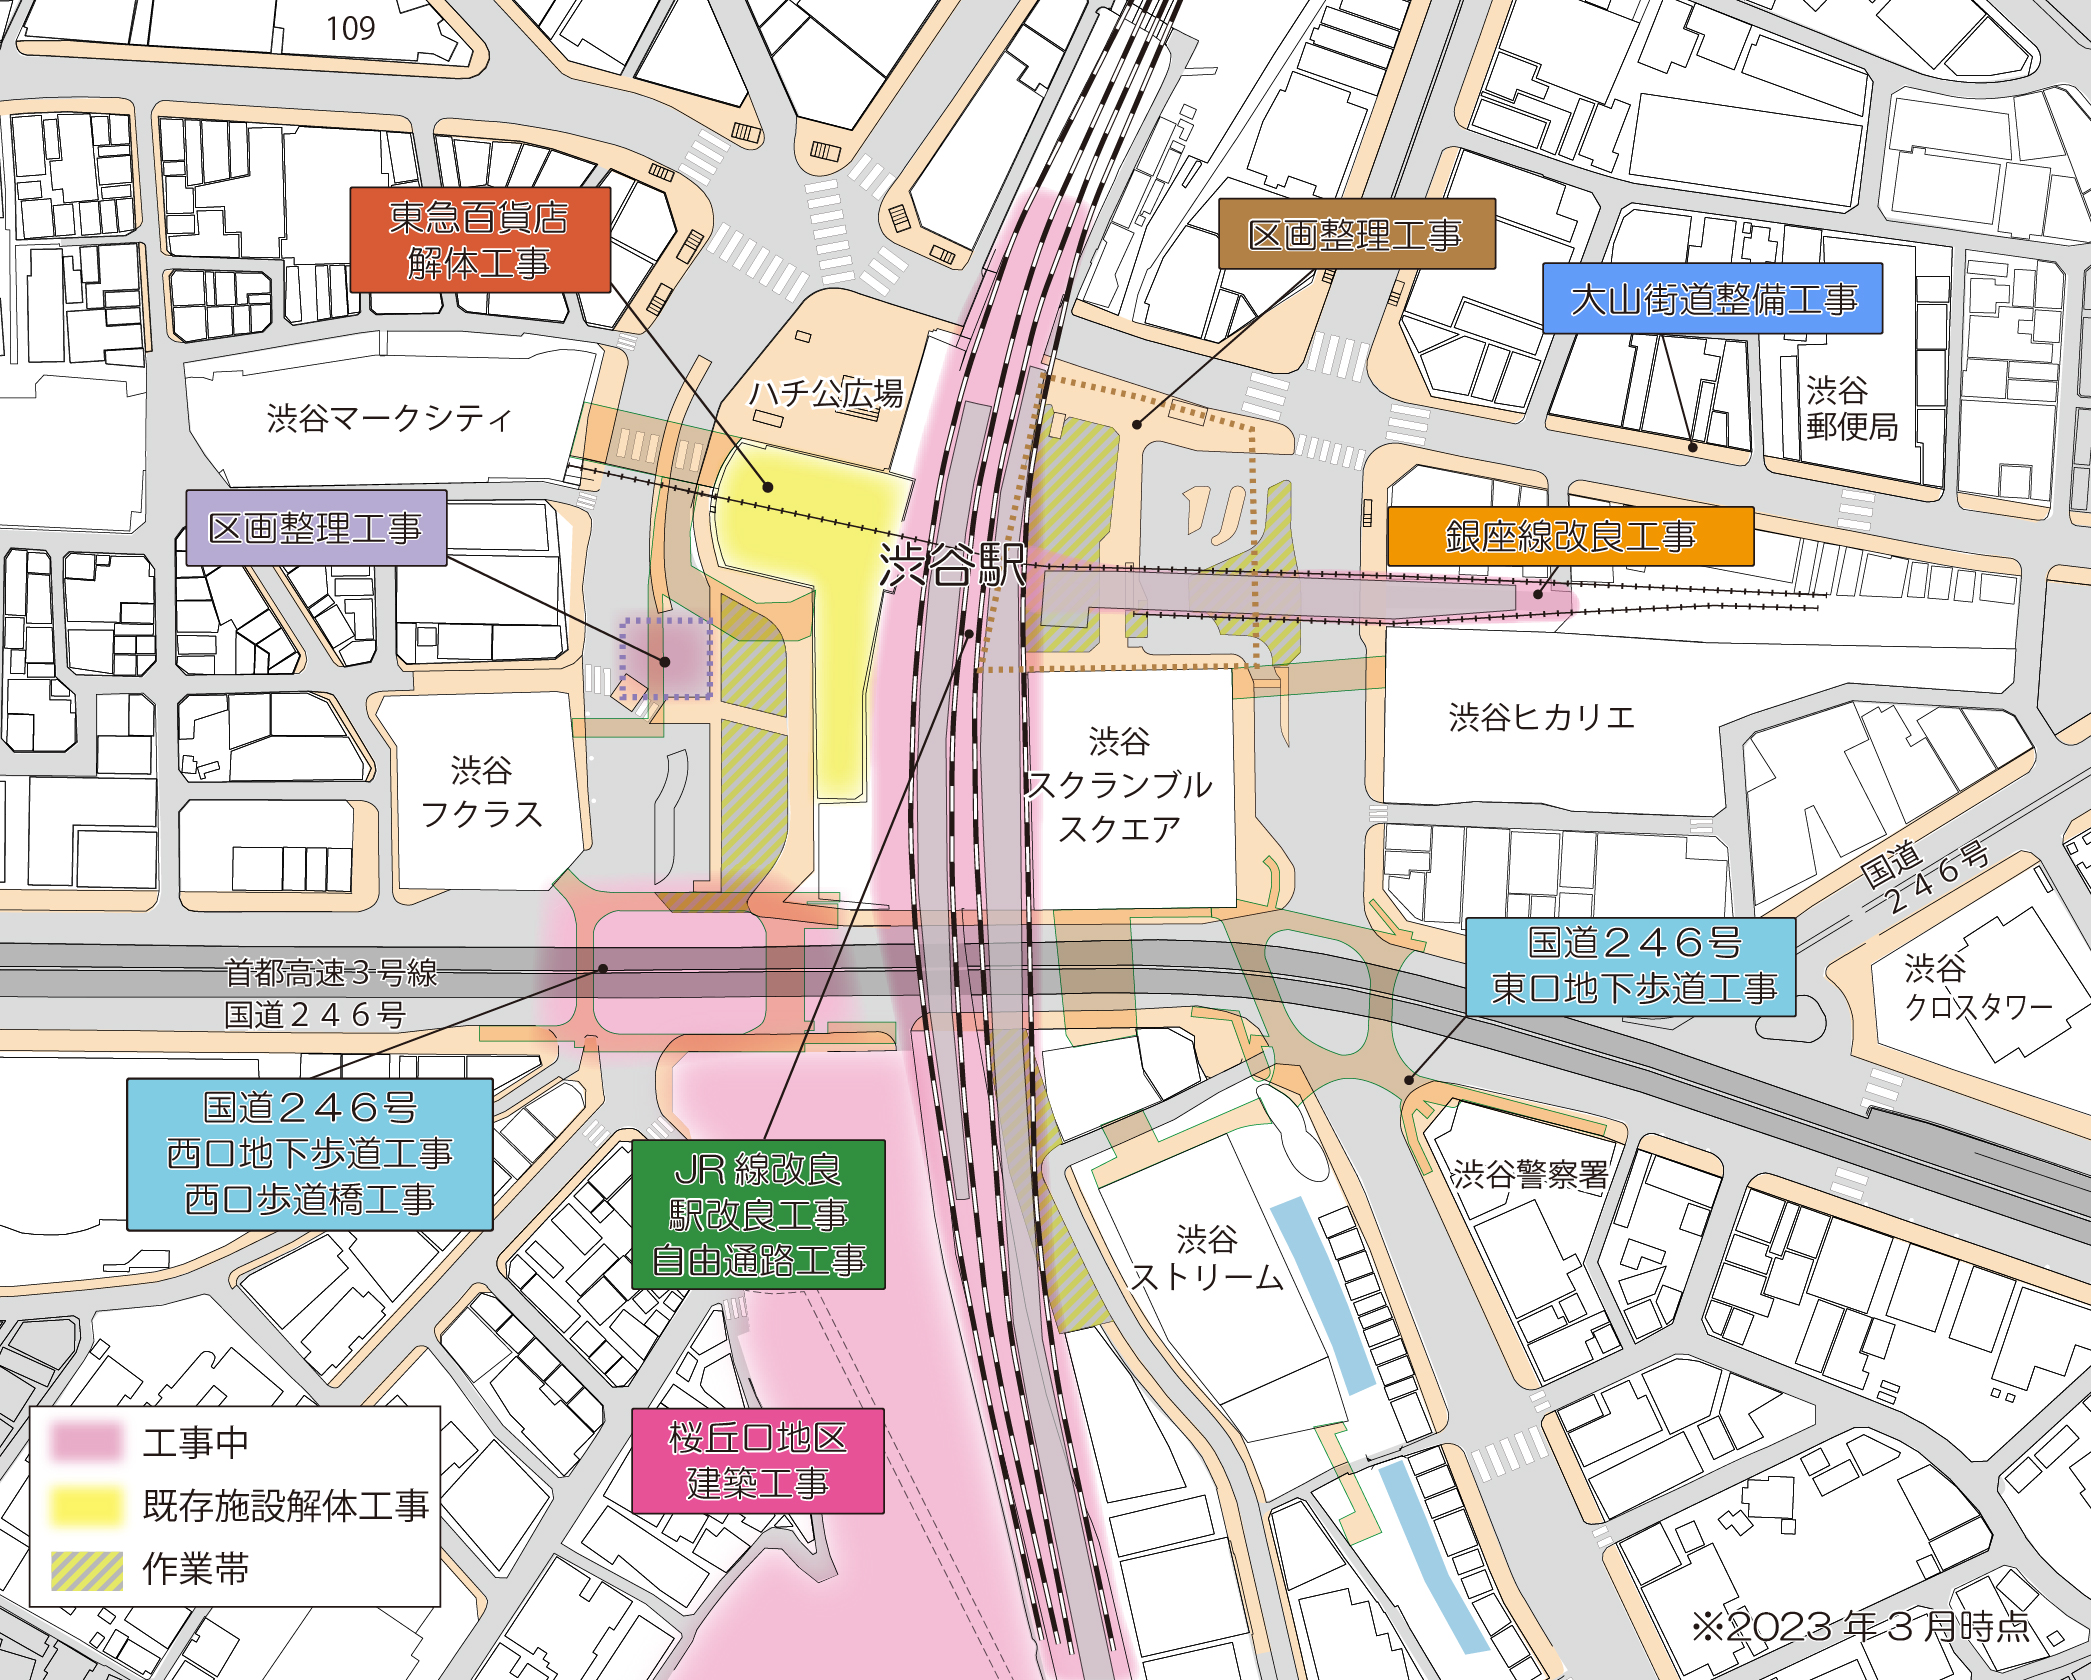 The situation map around current Shibuya Station